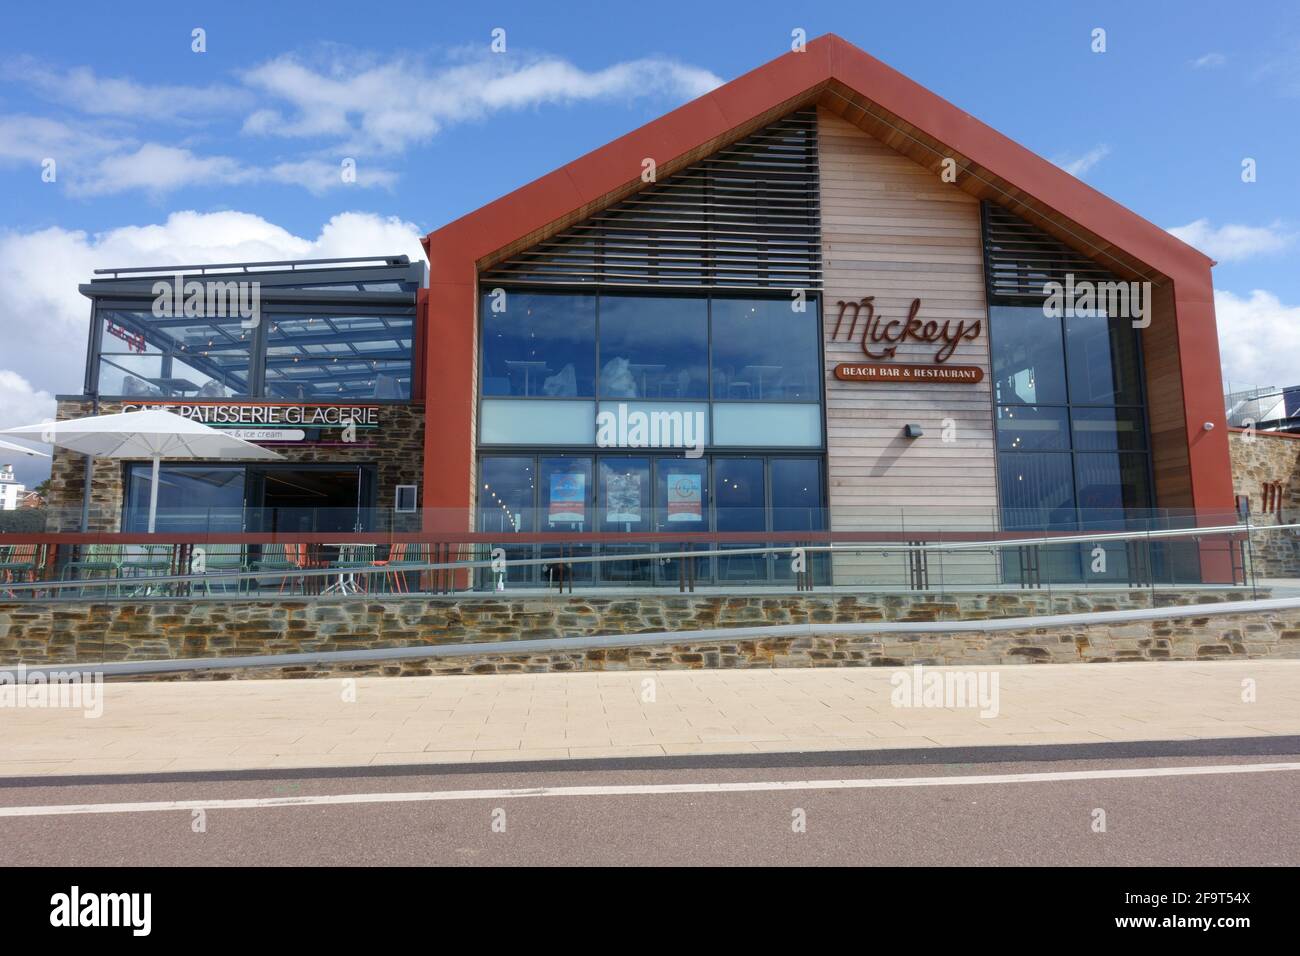 Mickeys beach bar  and restaurant(Michael Caine's), Sideshore, Exmouth, East Devon, England, UK Stock Photo